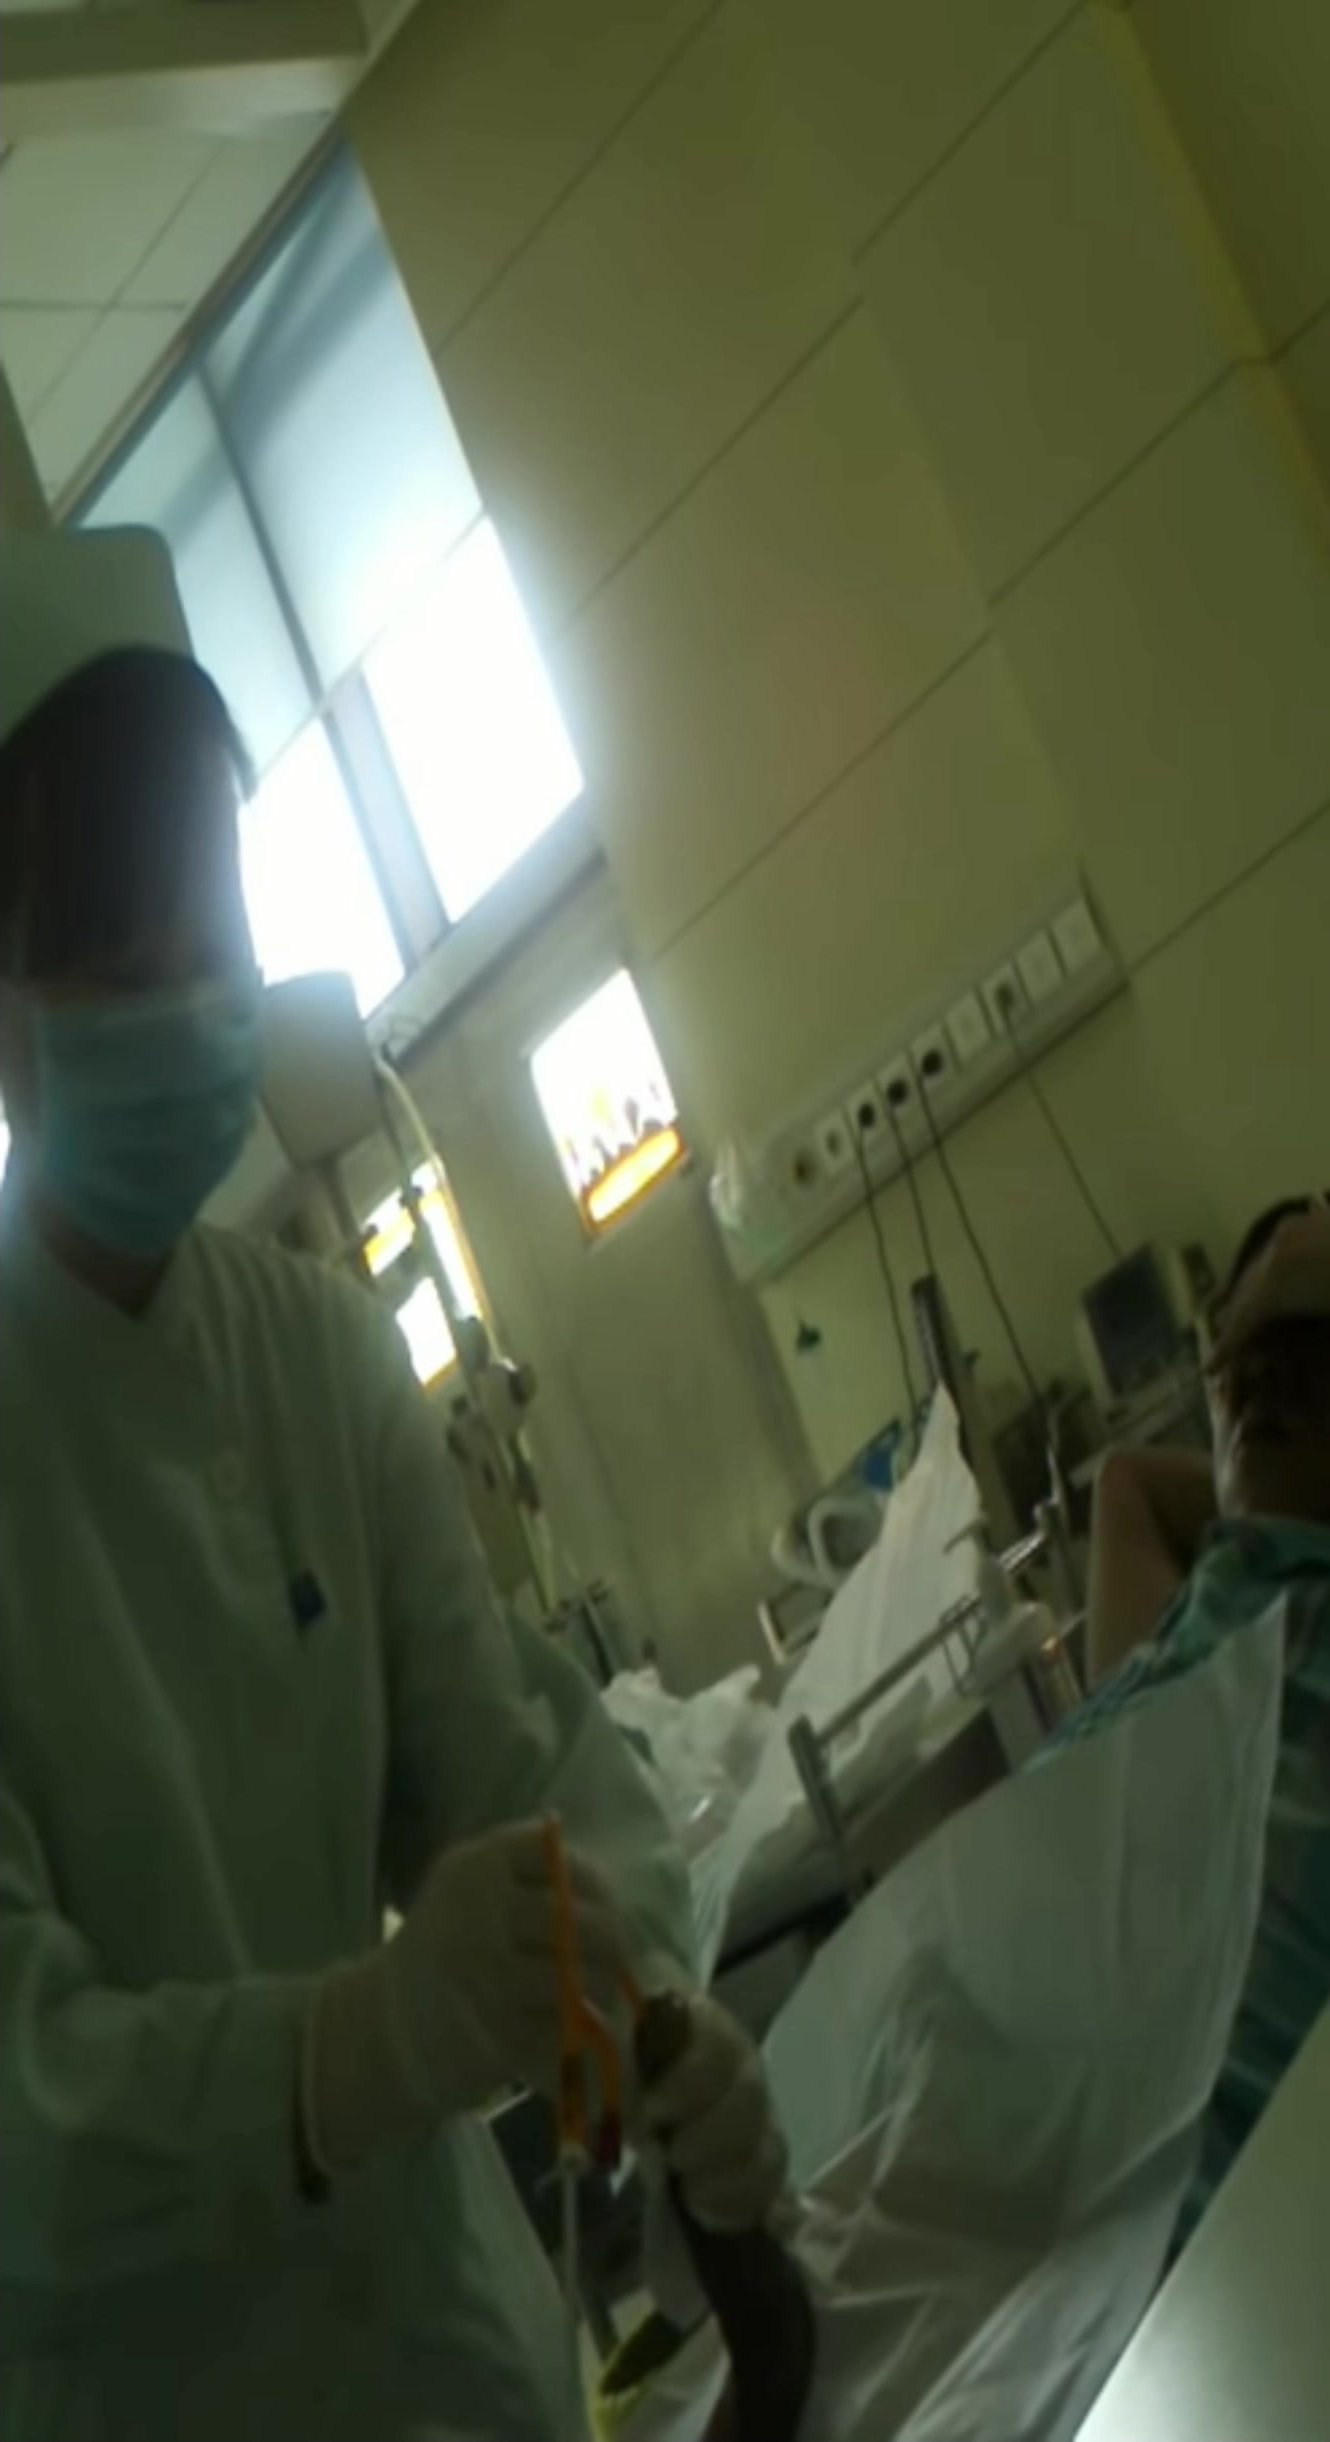 Nurse Placing Catheter with Erection